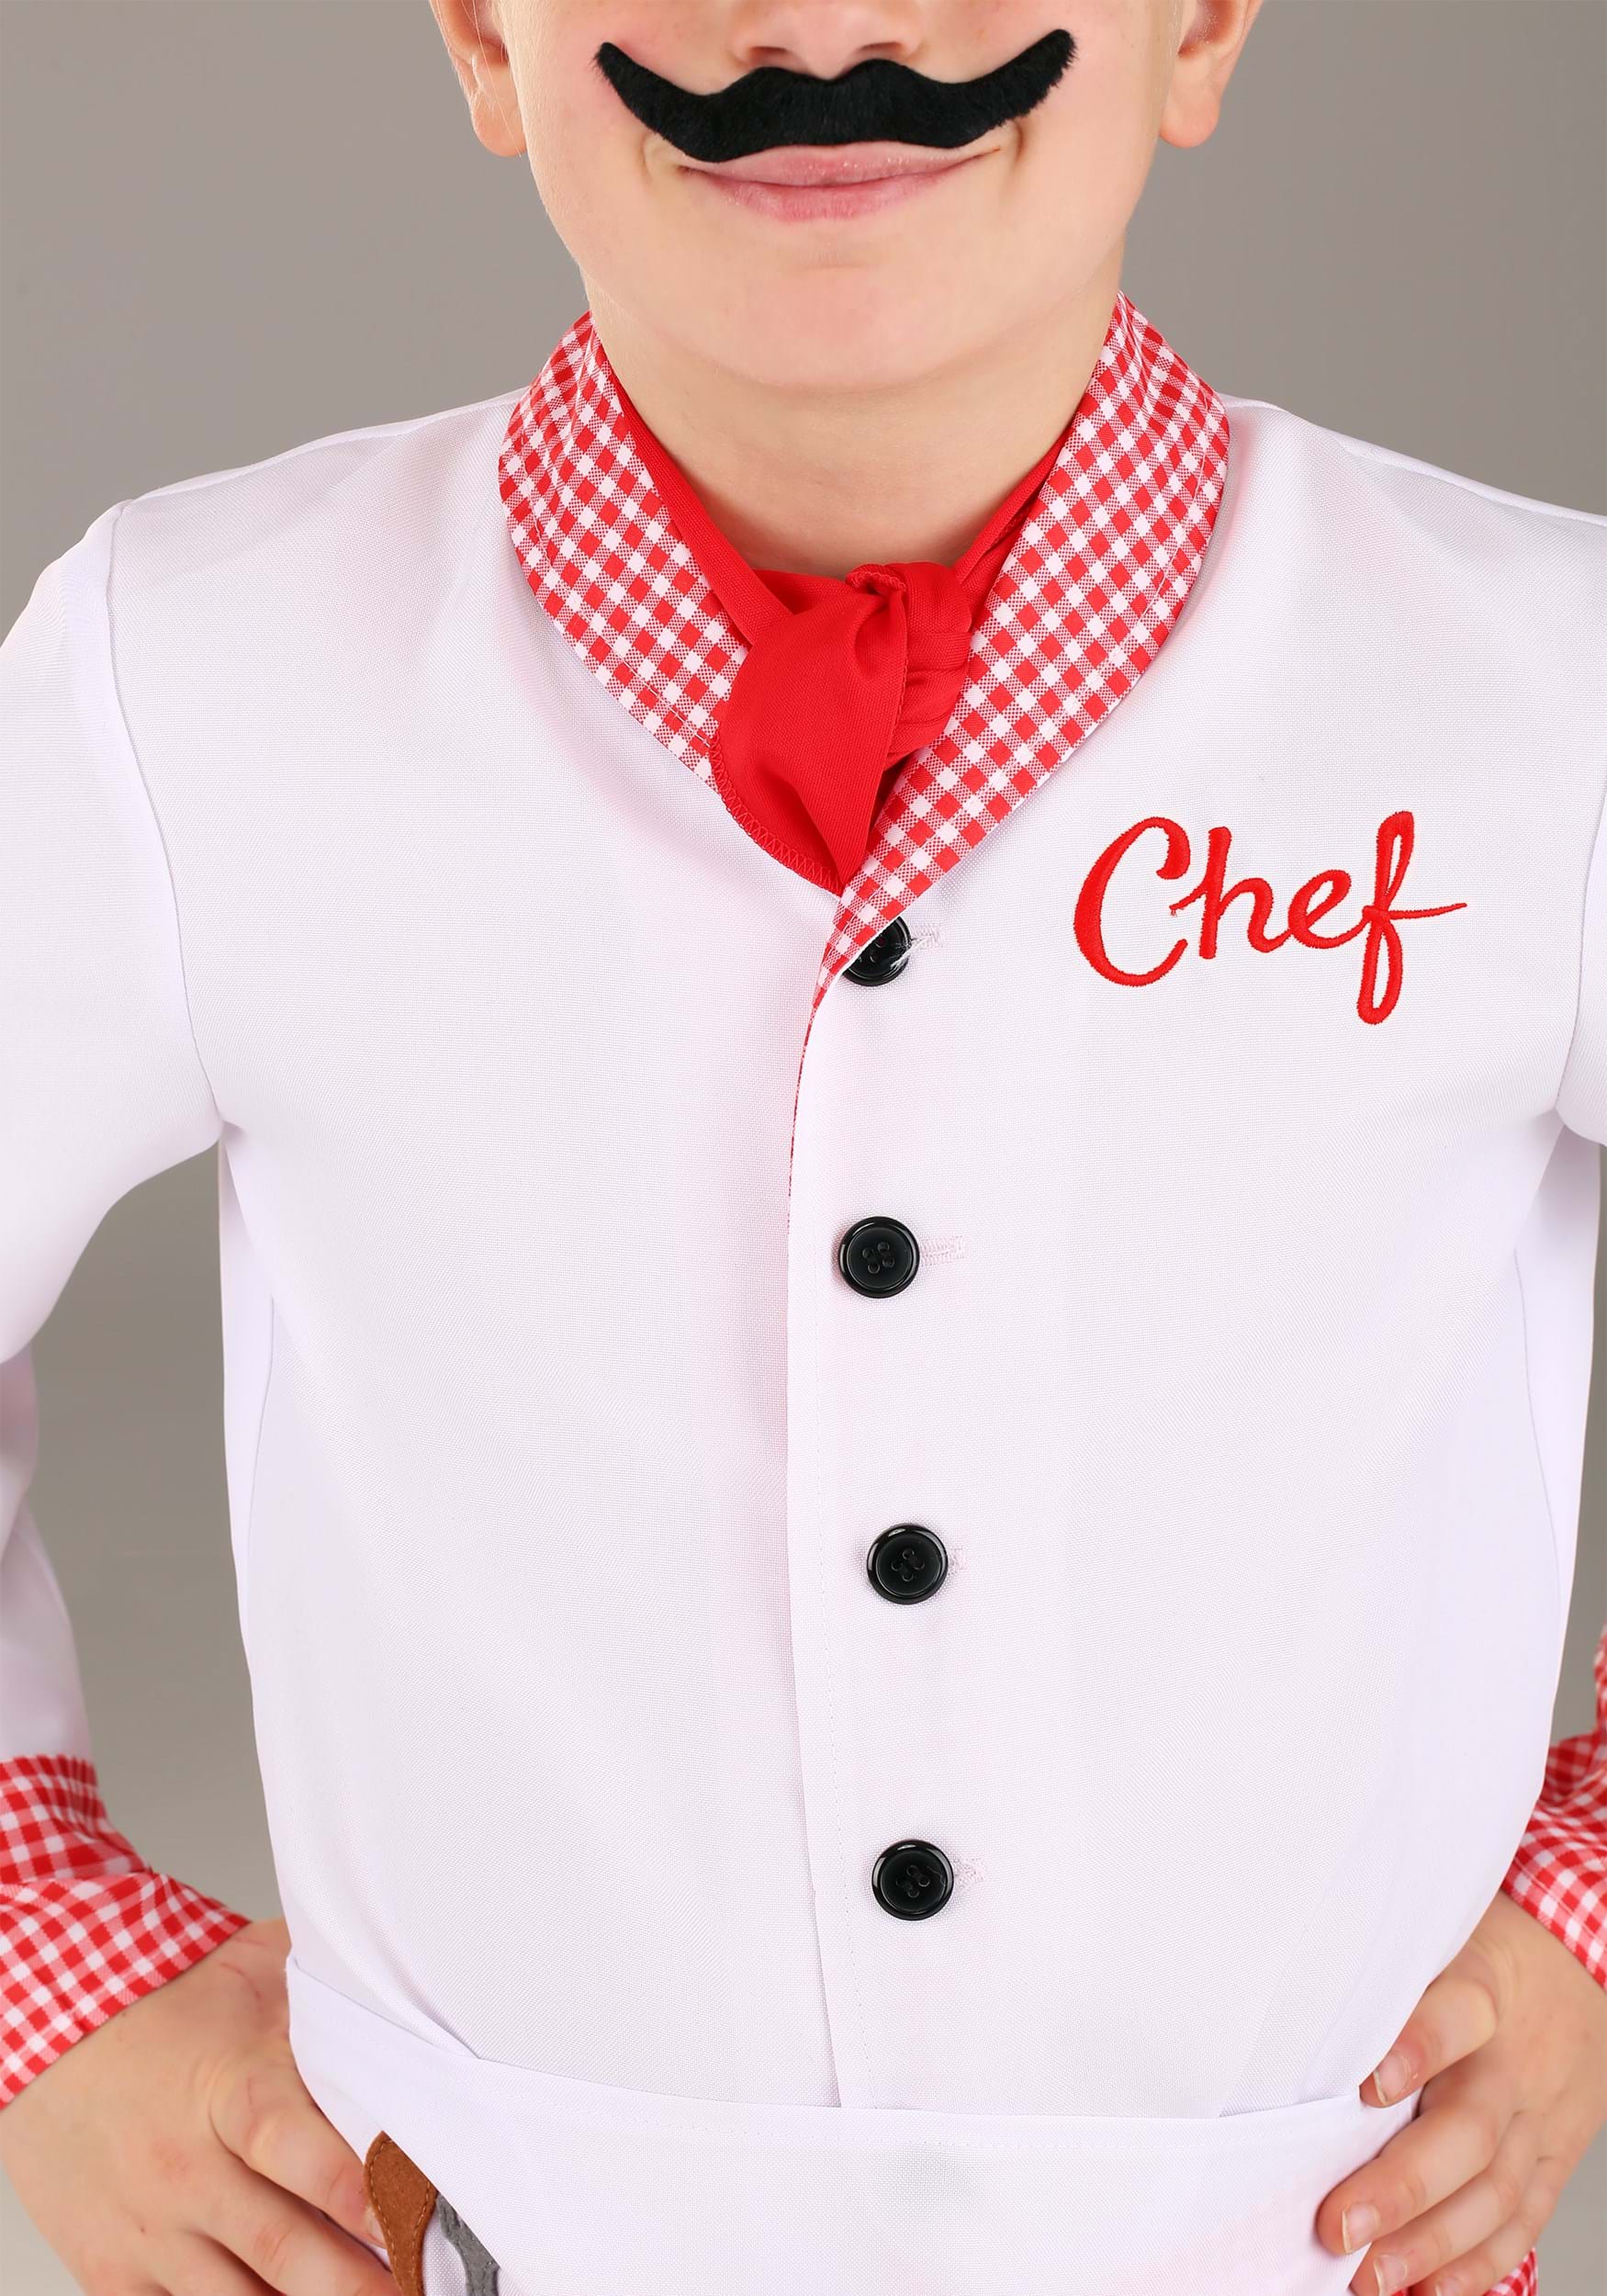 https://images.fun.com/products/51019/2-1-169544/kids-chef-costume-alt-3.jpg